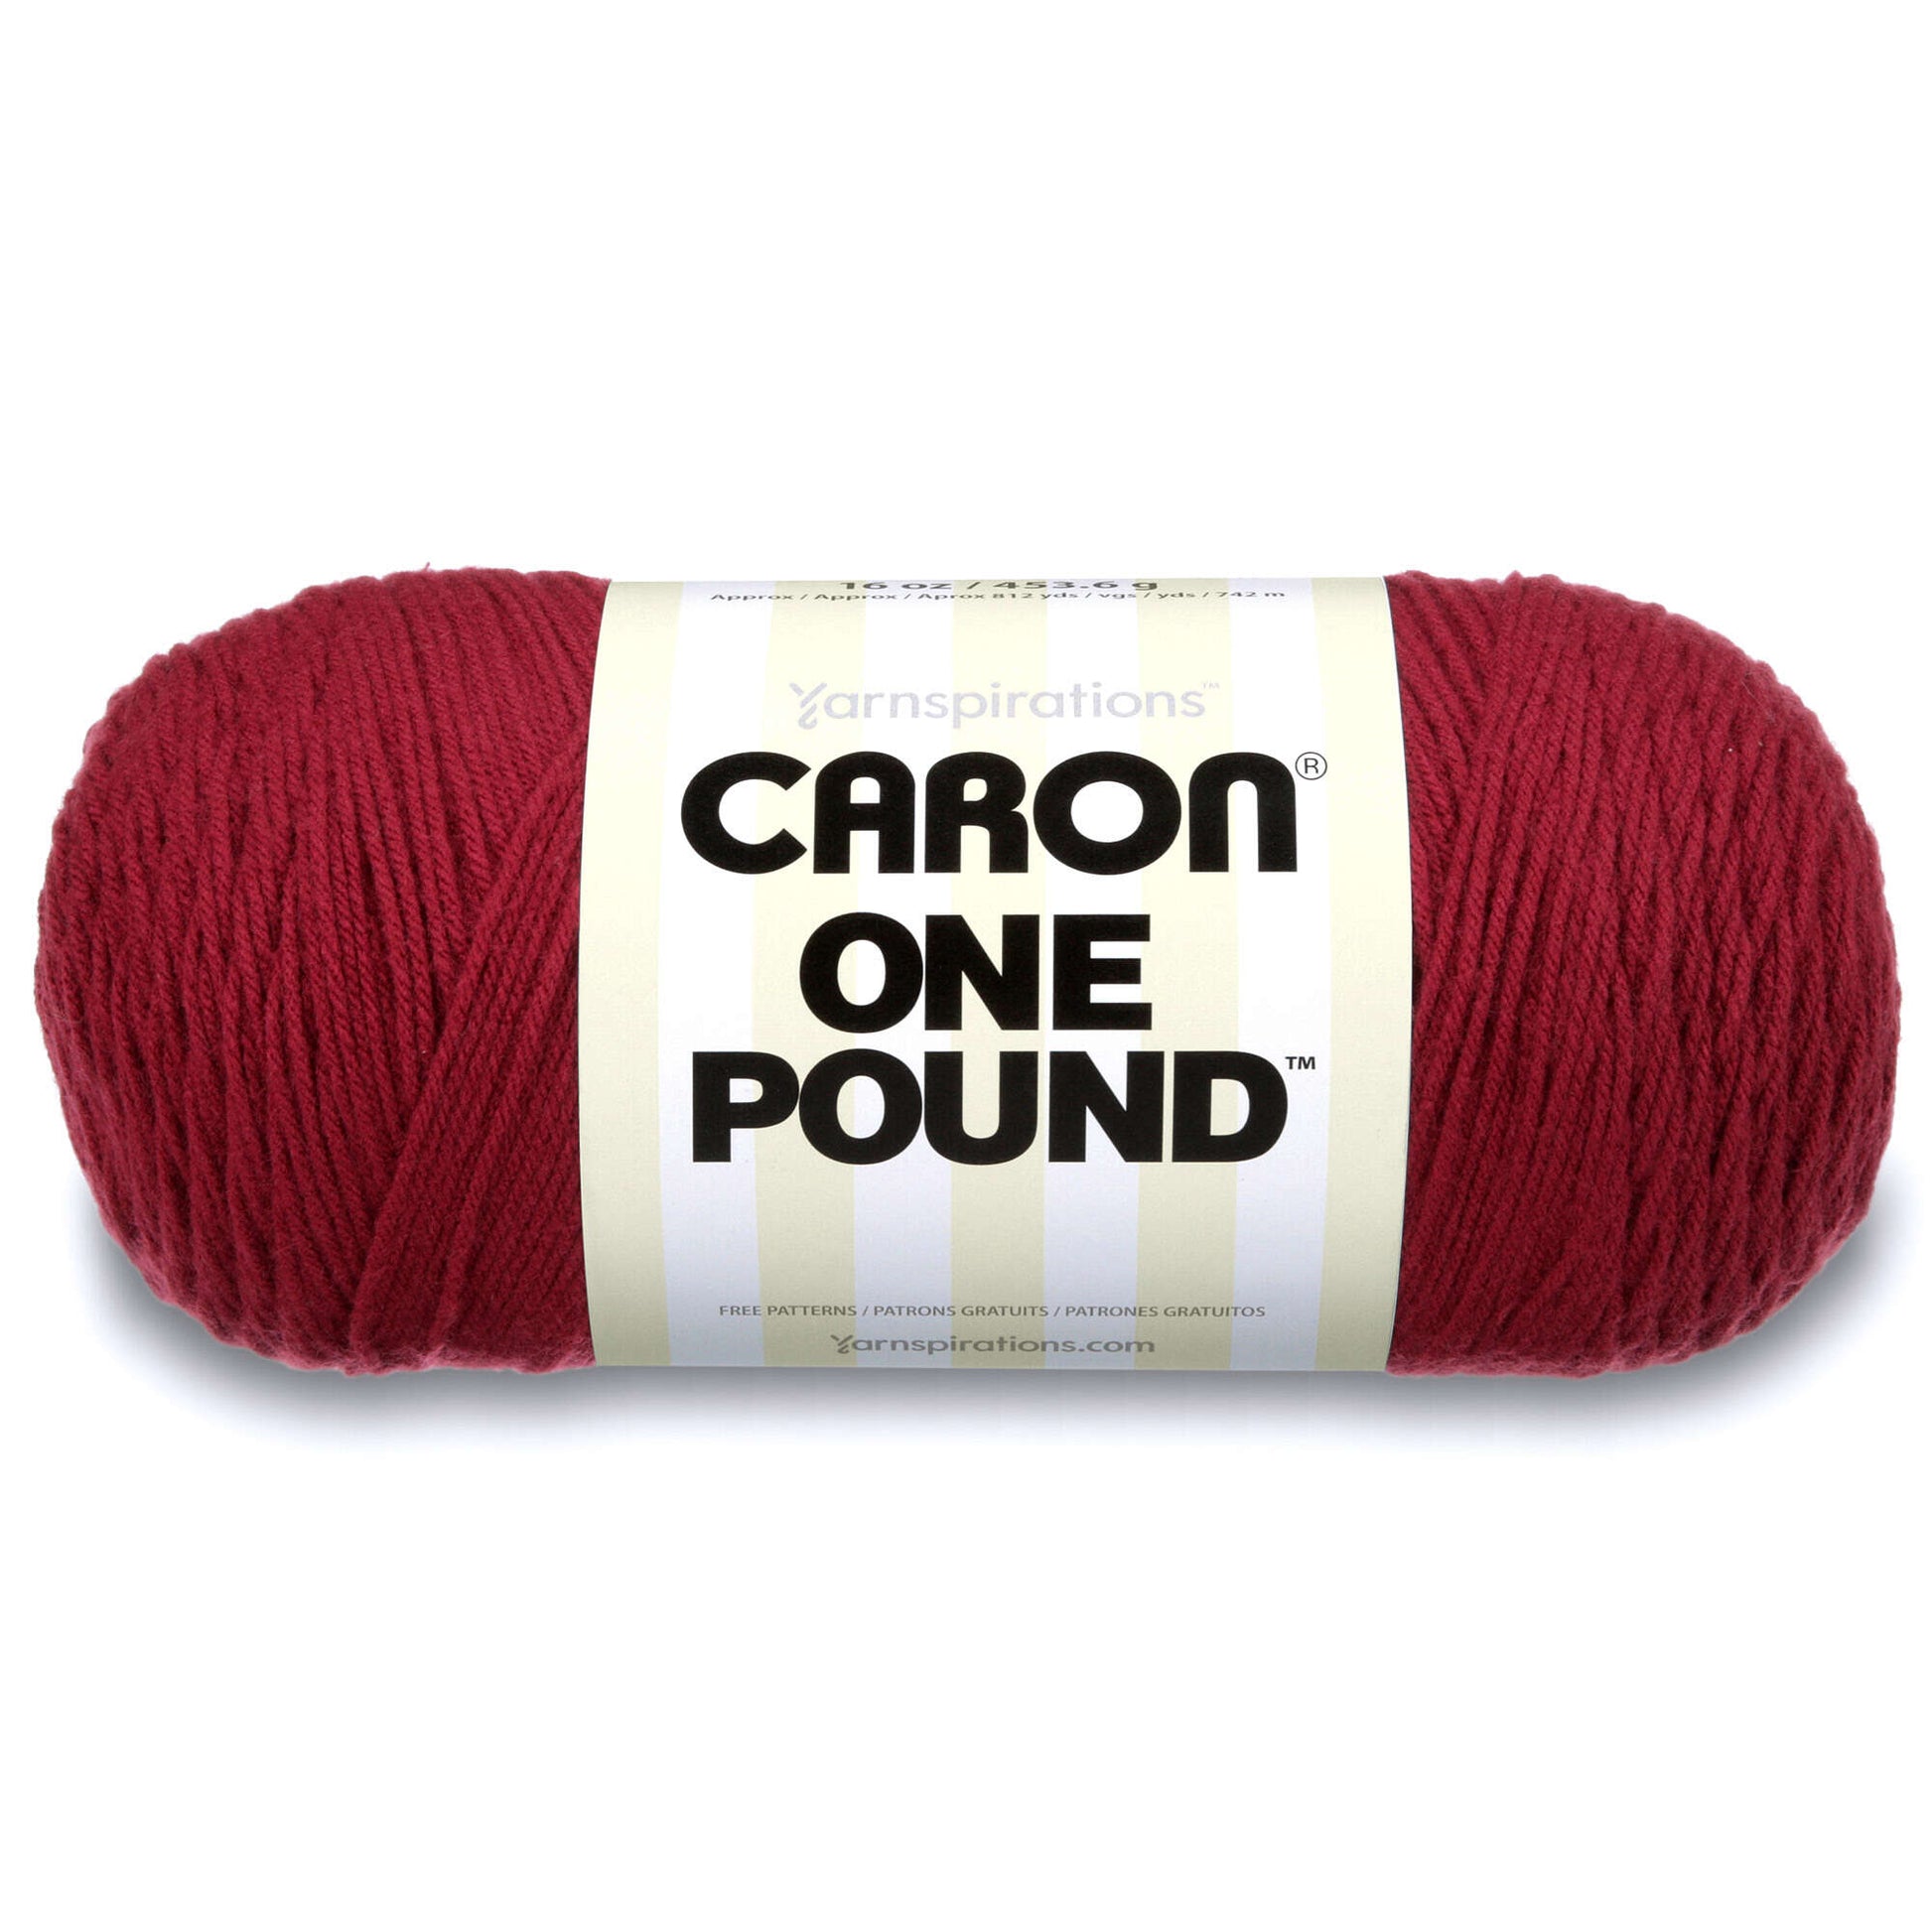 Caron One Pound Yarn Country Rose